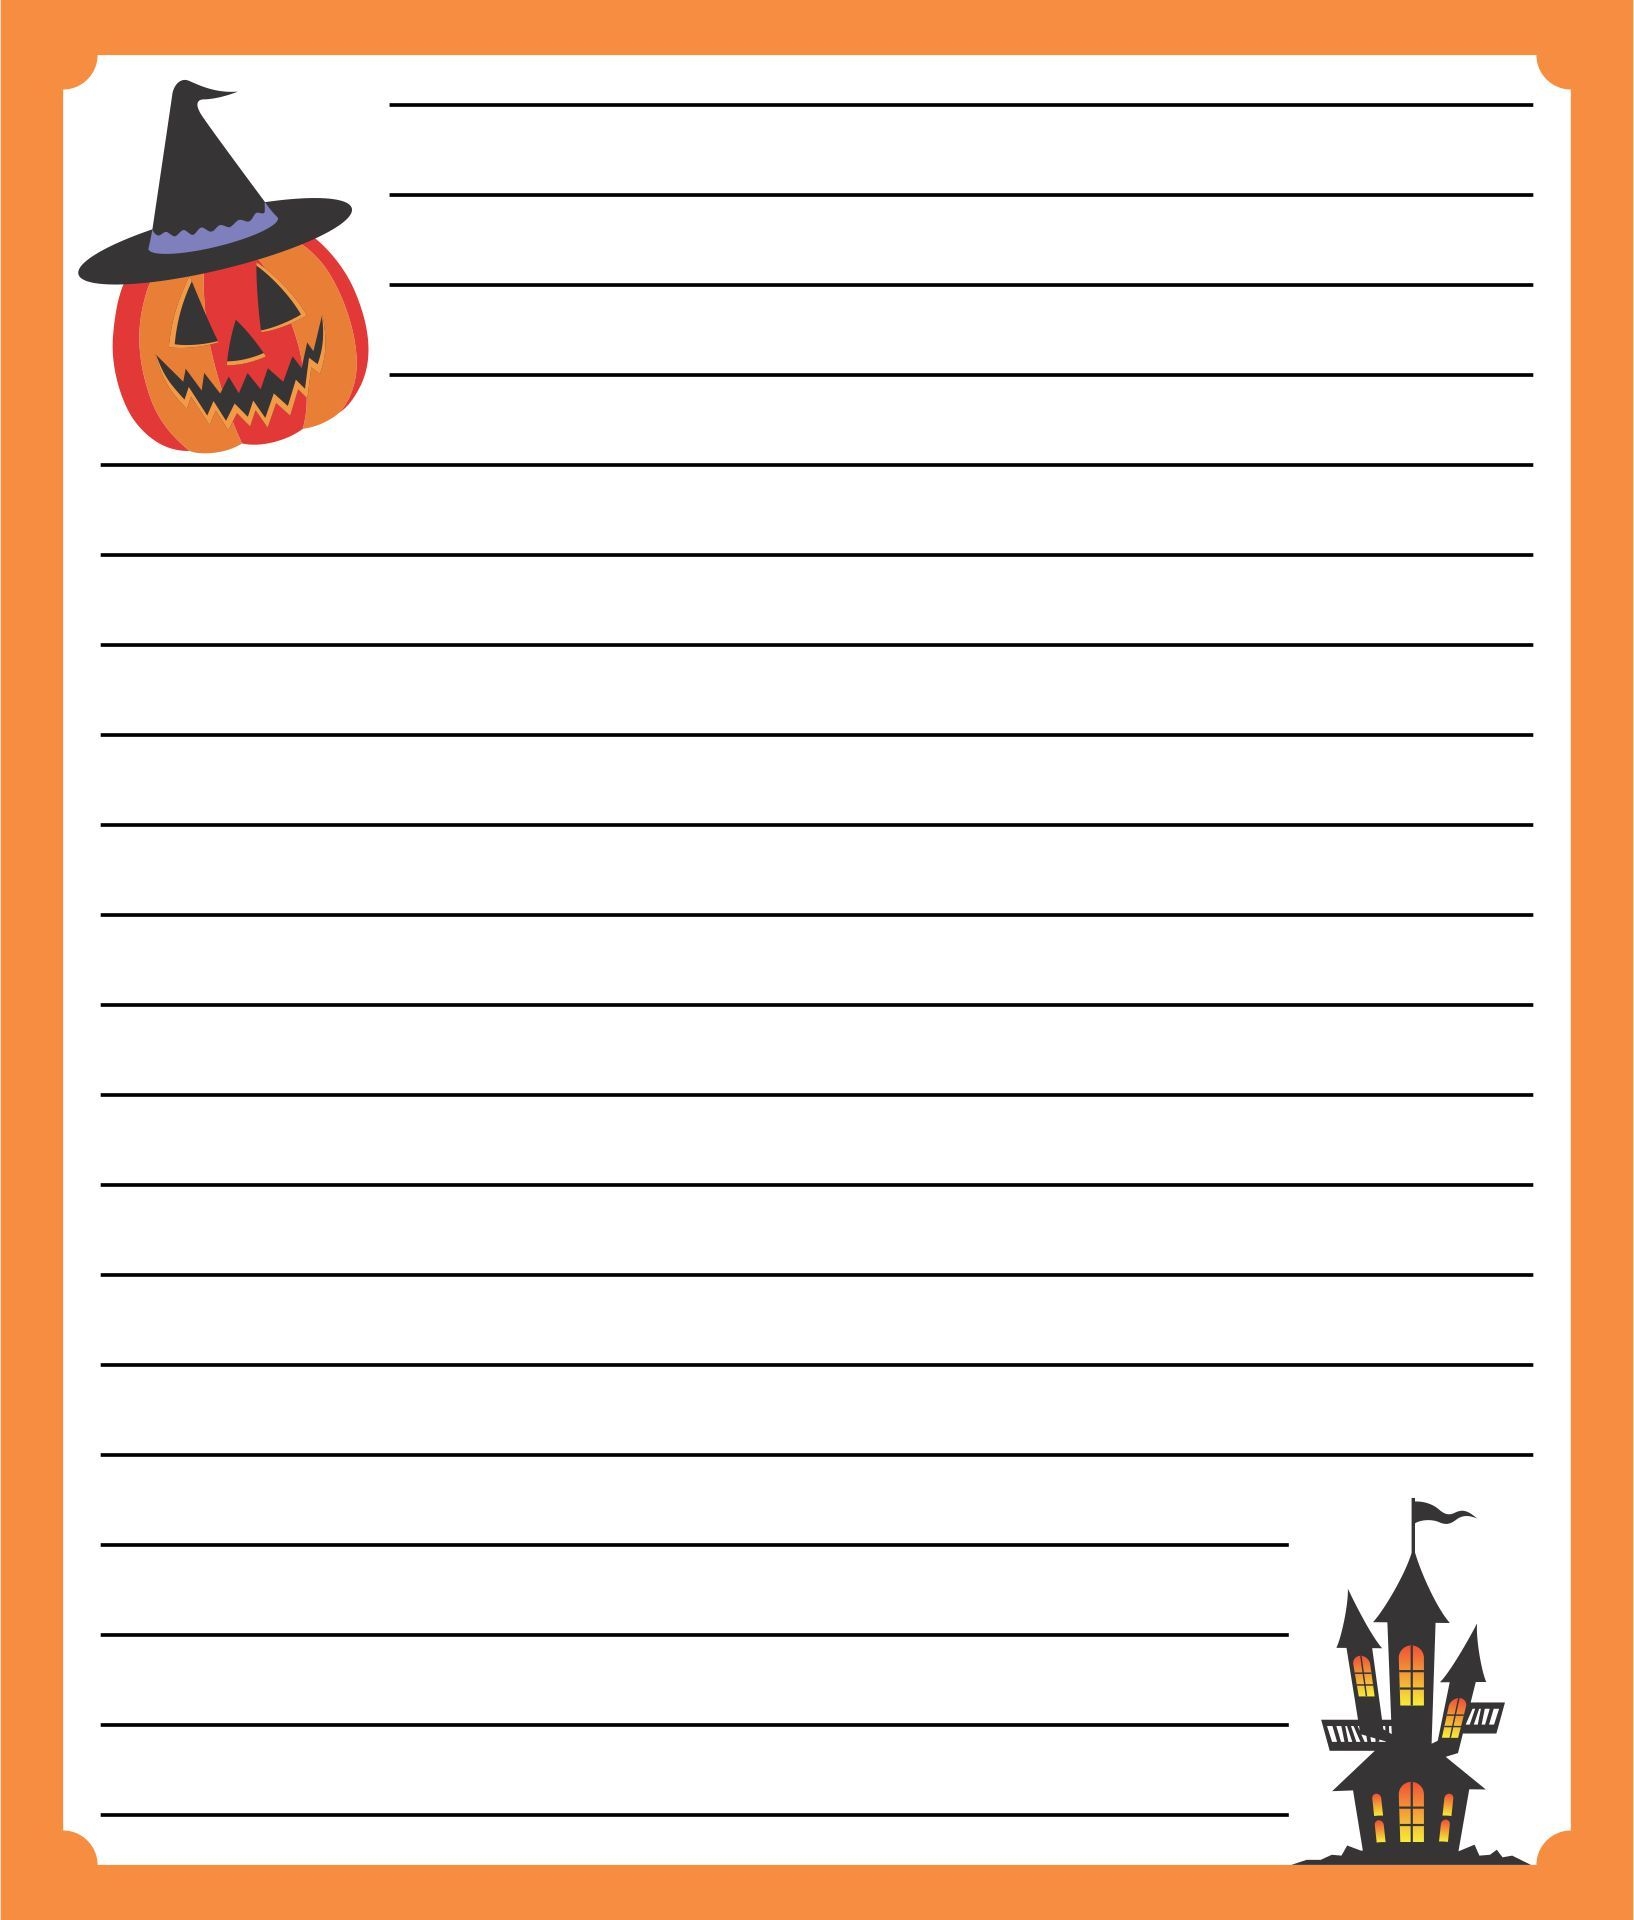 15 Best Free Printable Halloween Border Paper PDF For Free At Printablee Halloween Writing Paper Writing Paper Halloween Writing